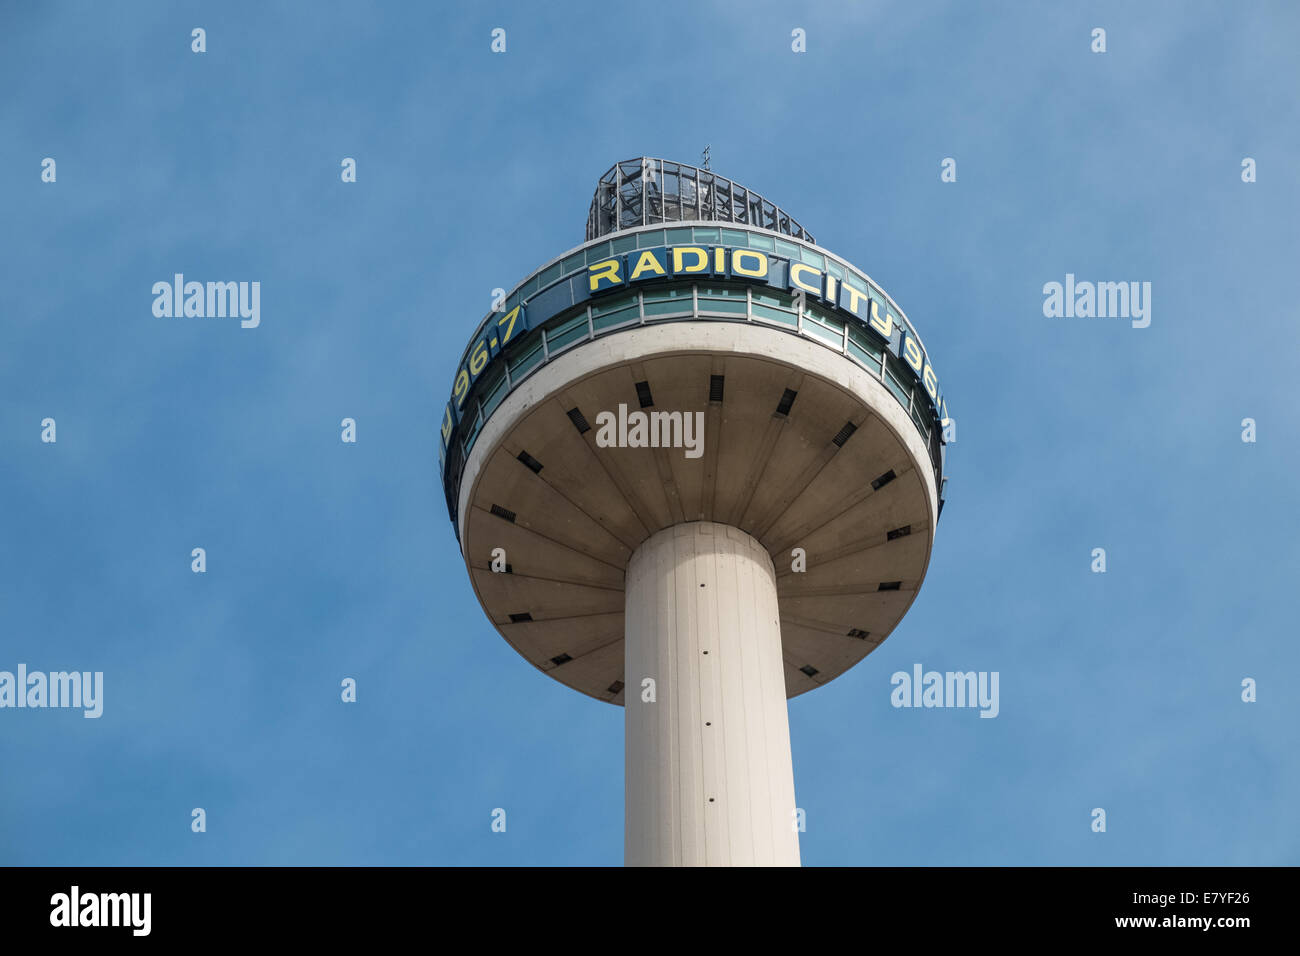 Radio City 96.7 studio tower (also known as St Johns Beacon), Liverpool, Merseyside, England, UK Stock Photo